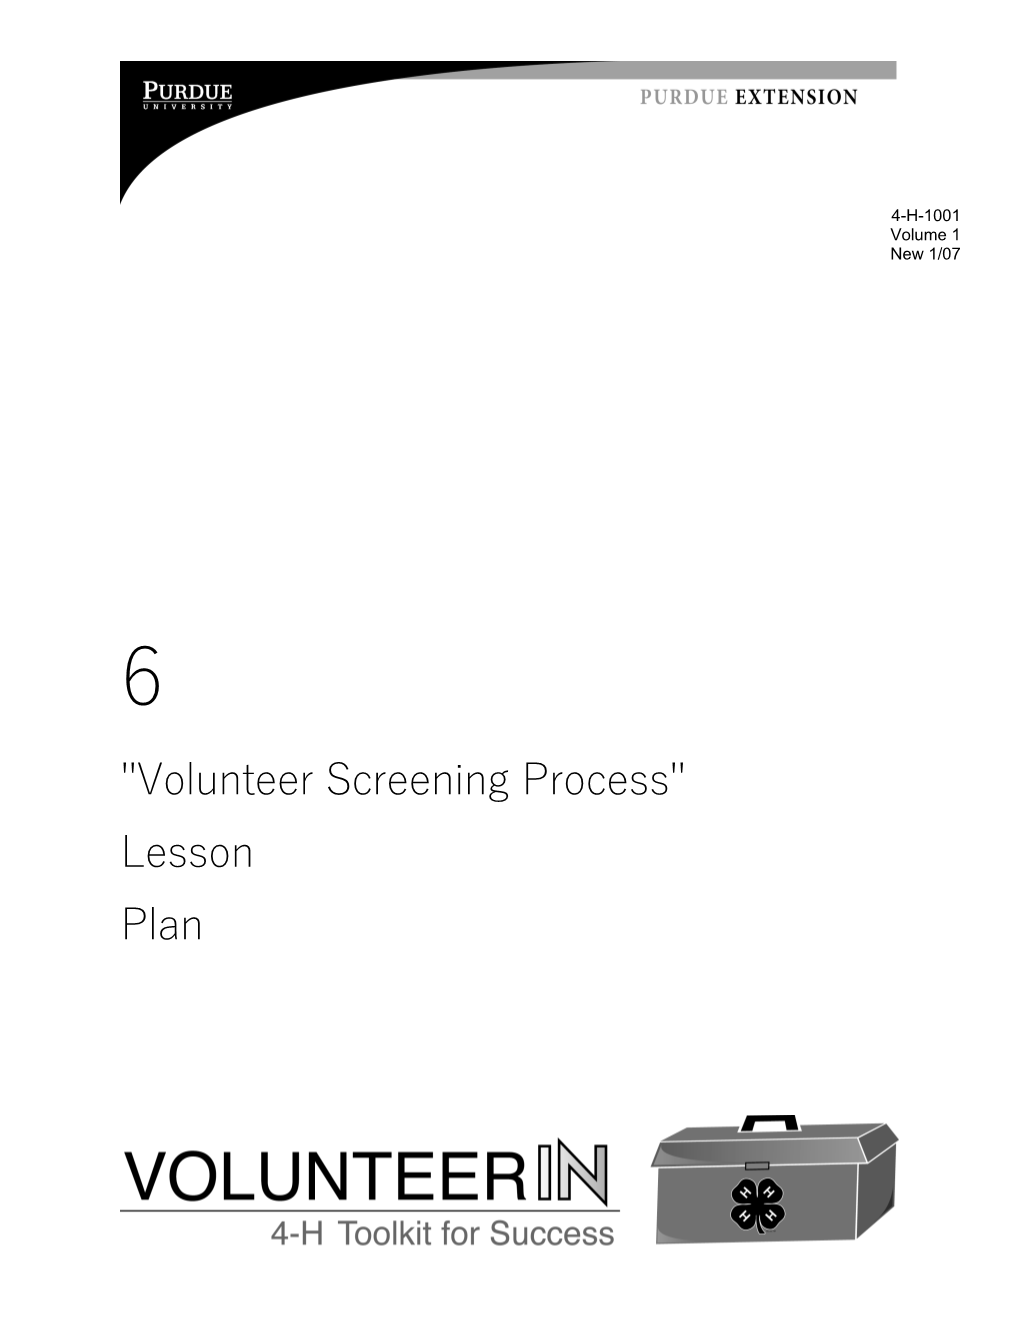 Volunteer Screening Process